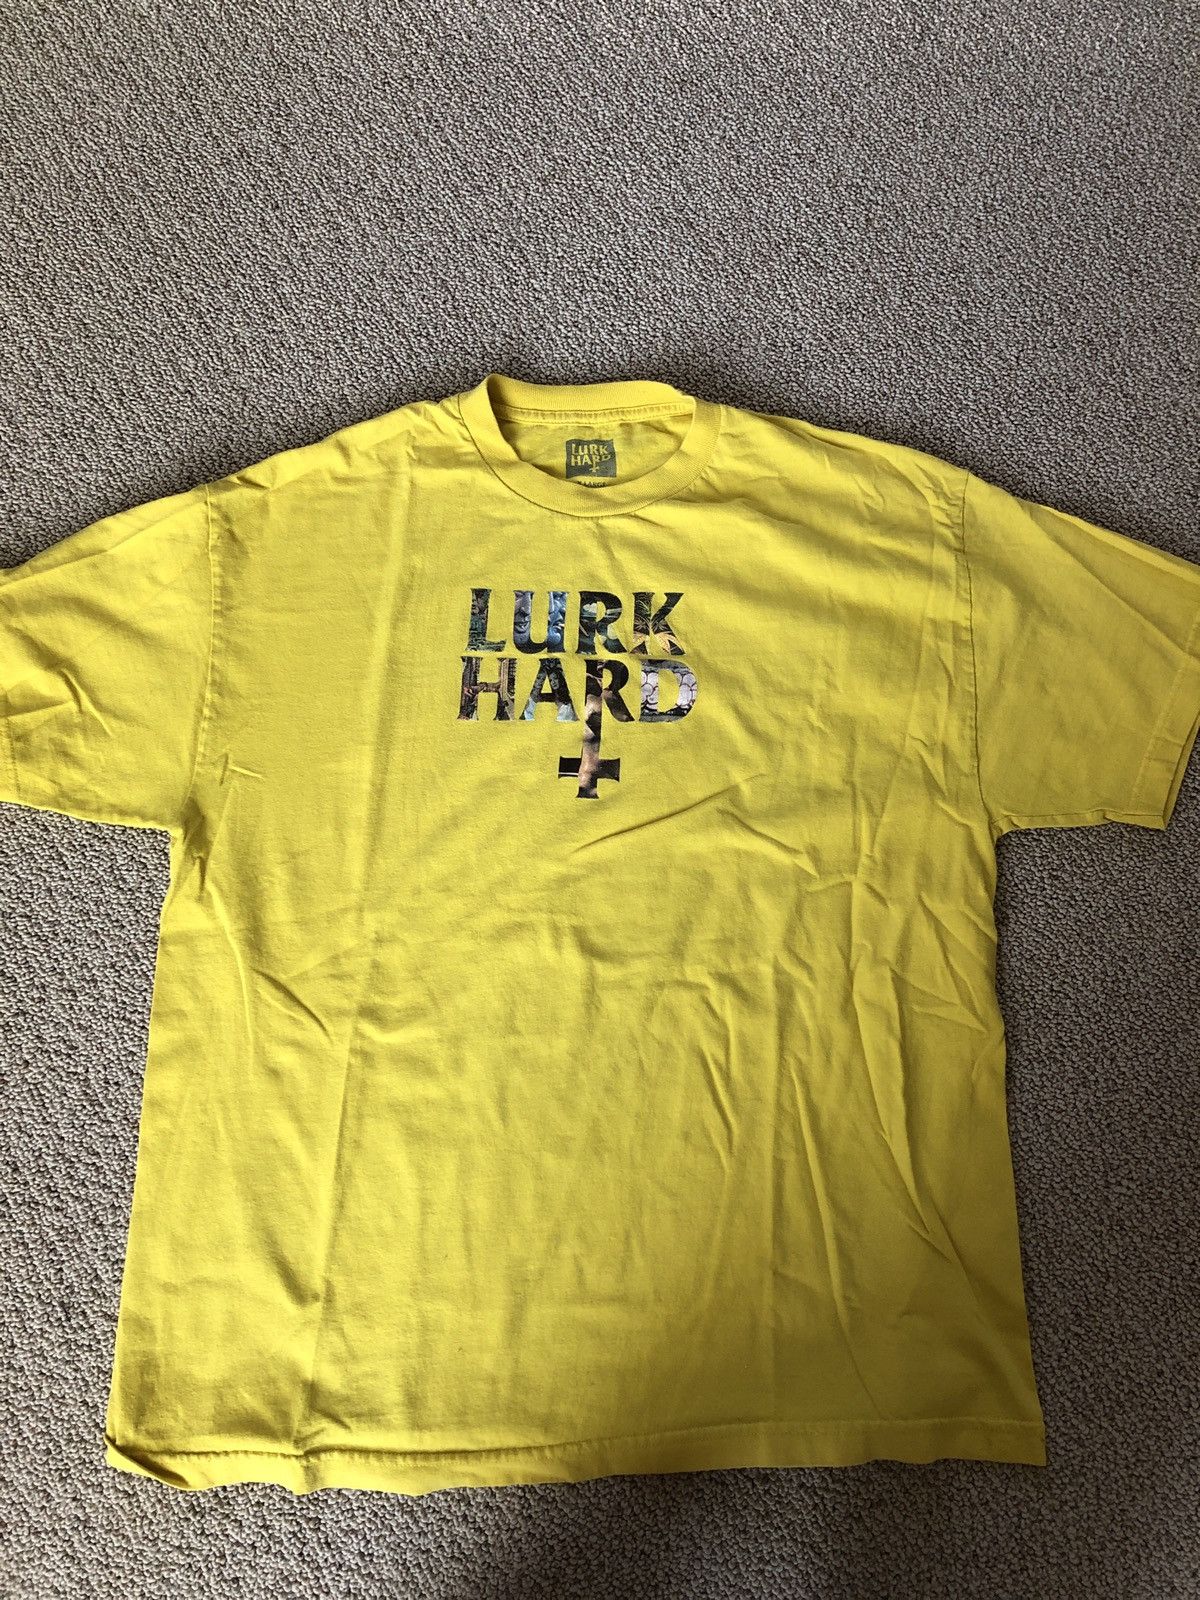 Lurk Hard Lurk hard upside down cross t shirt | Grailed